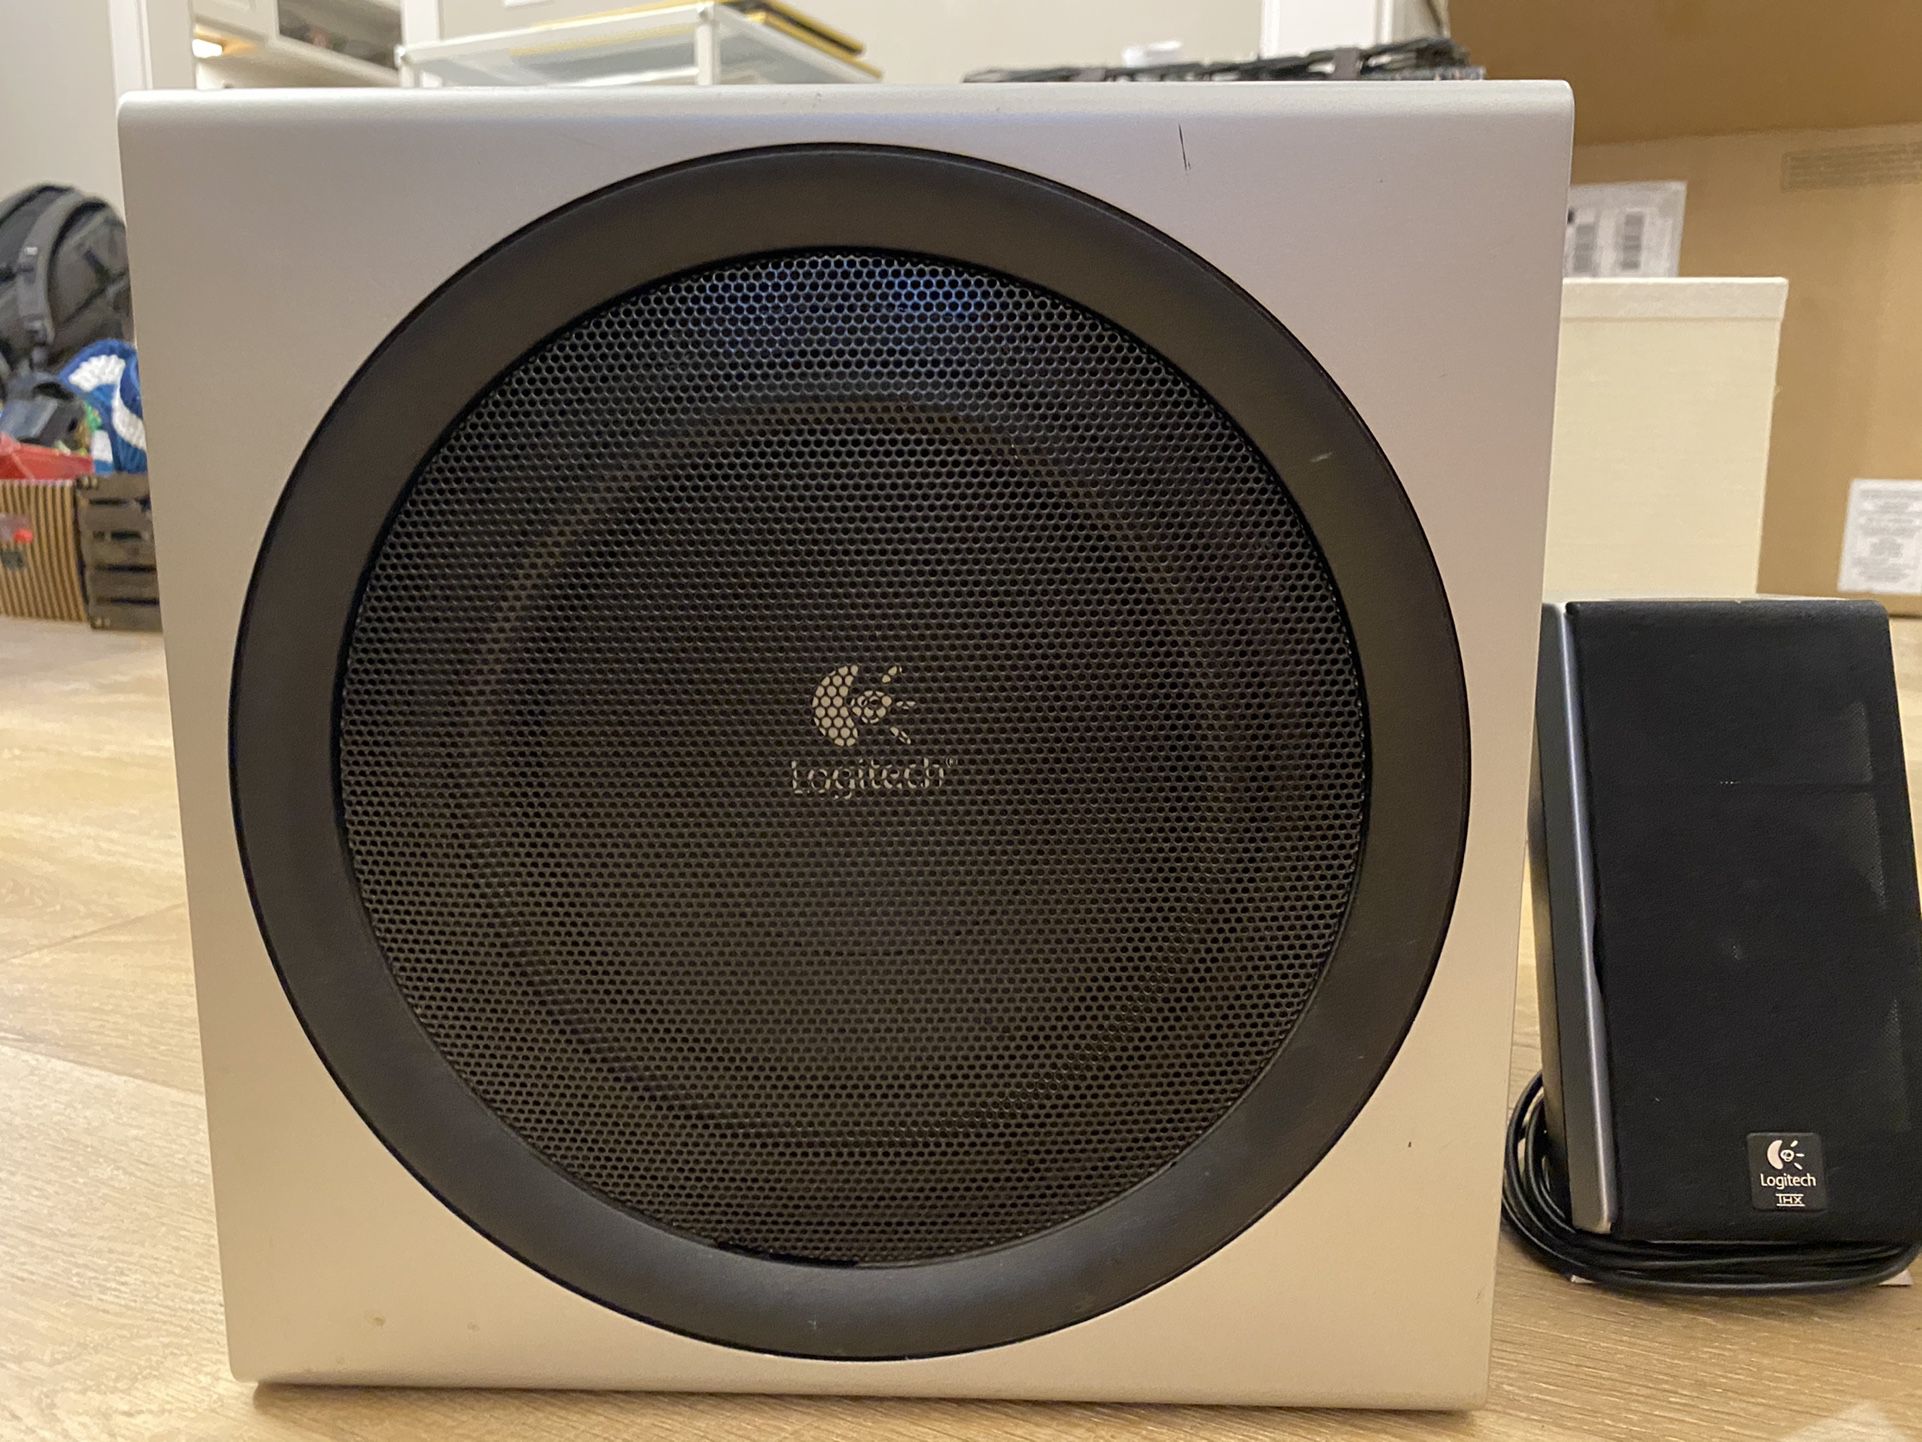 Logitech Z2300 Speakers Excellent Sound Condition! for Sale Kirkland, WA - OfferUp